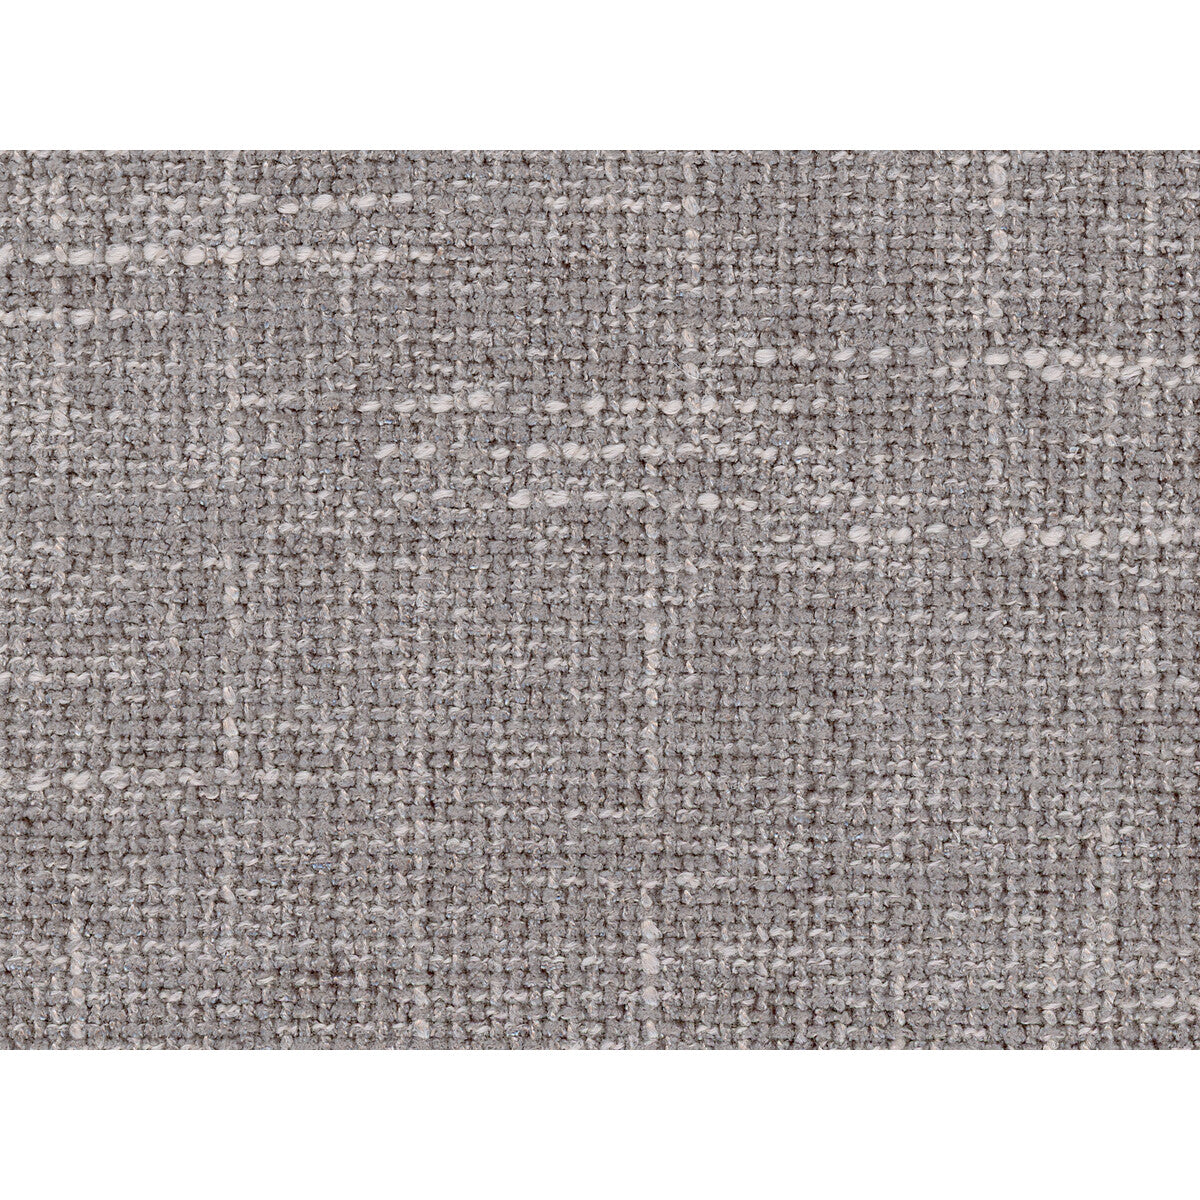 Sant Elm fabric in quartz color - pattern 35075.1121.0 - by Kravet Design in the Alexa Hampton Mallorca collection